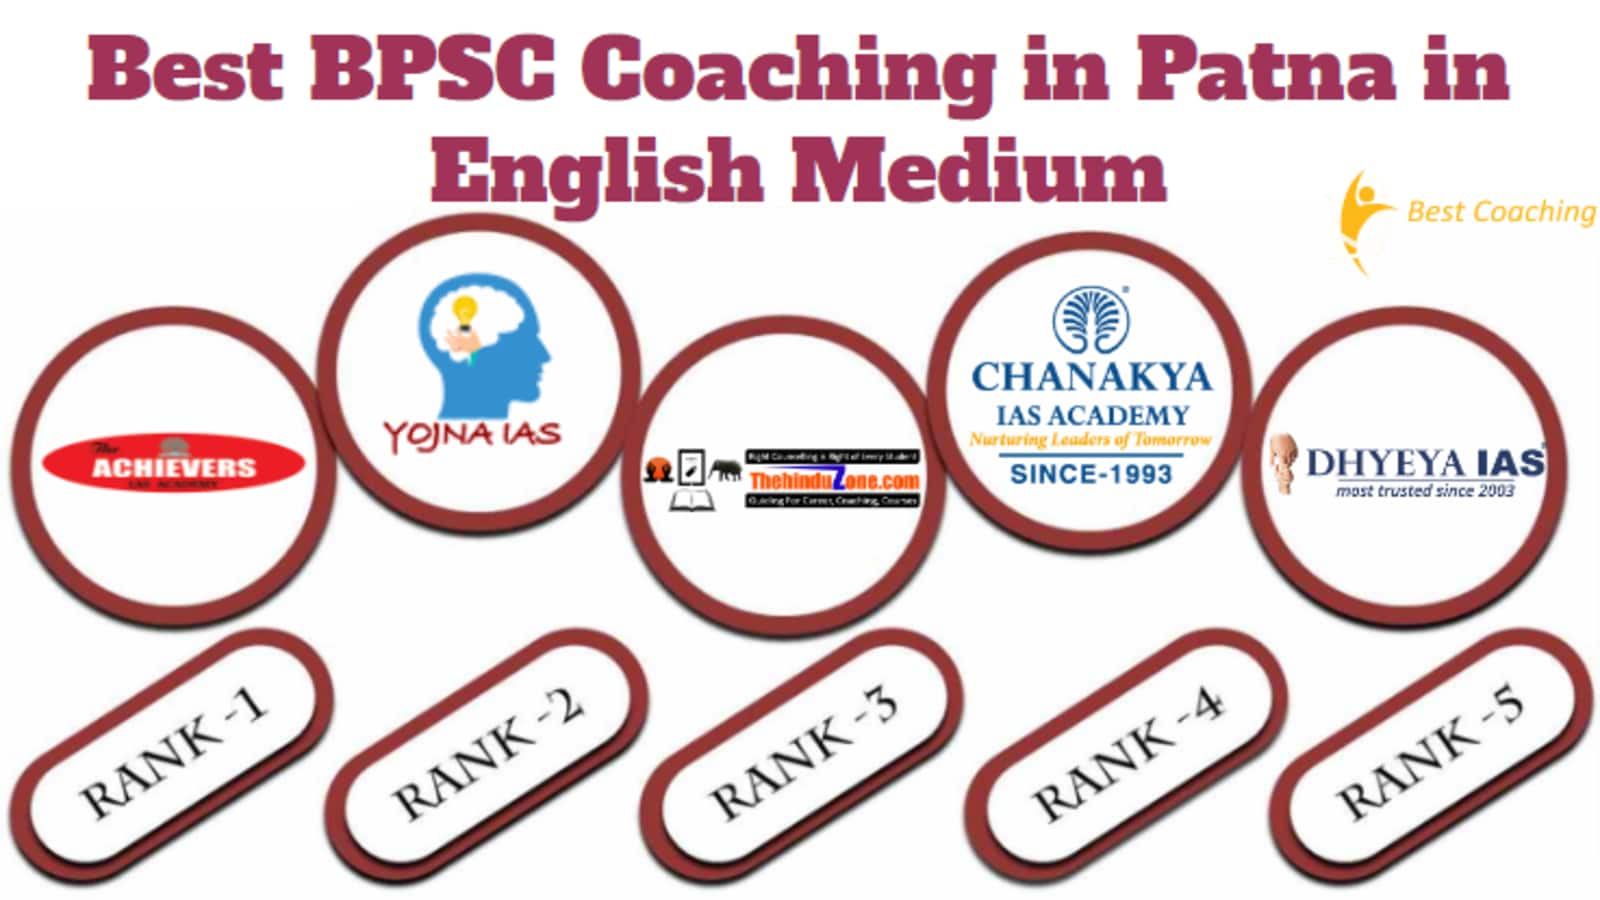 Best BPSC Coaching in Patna in English Medium